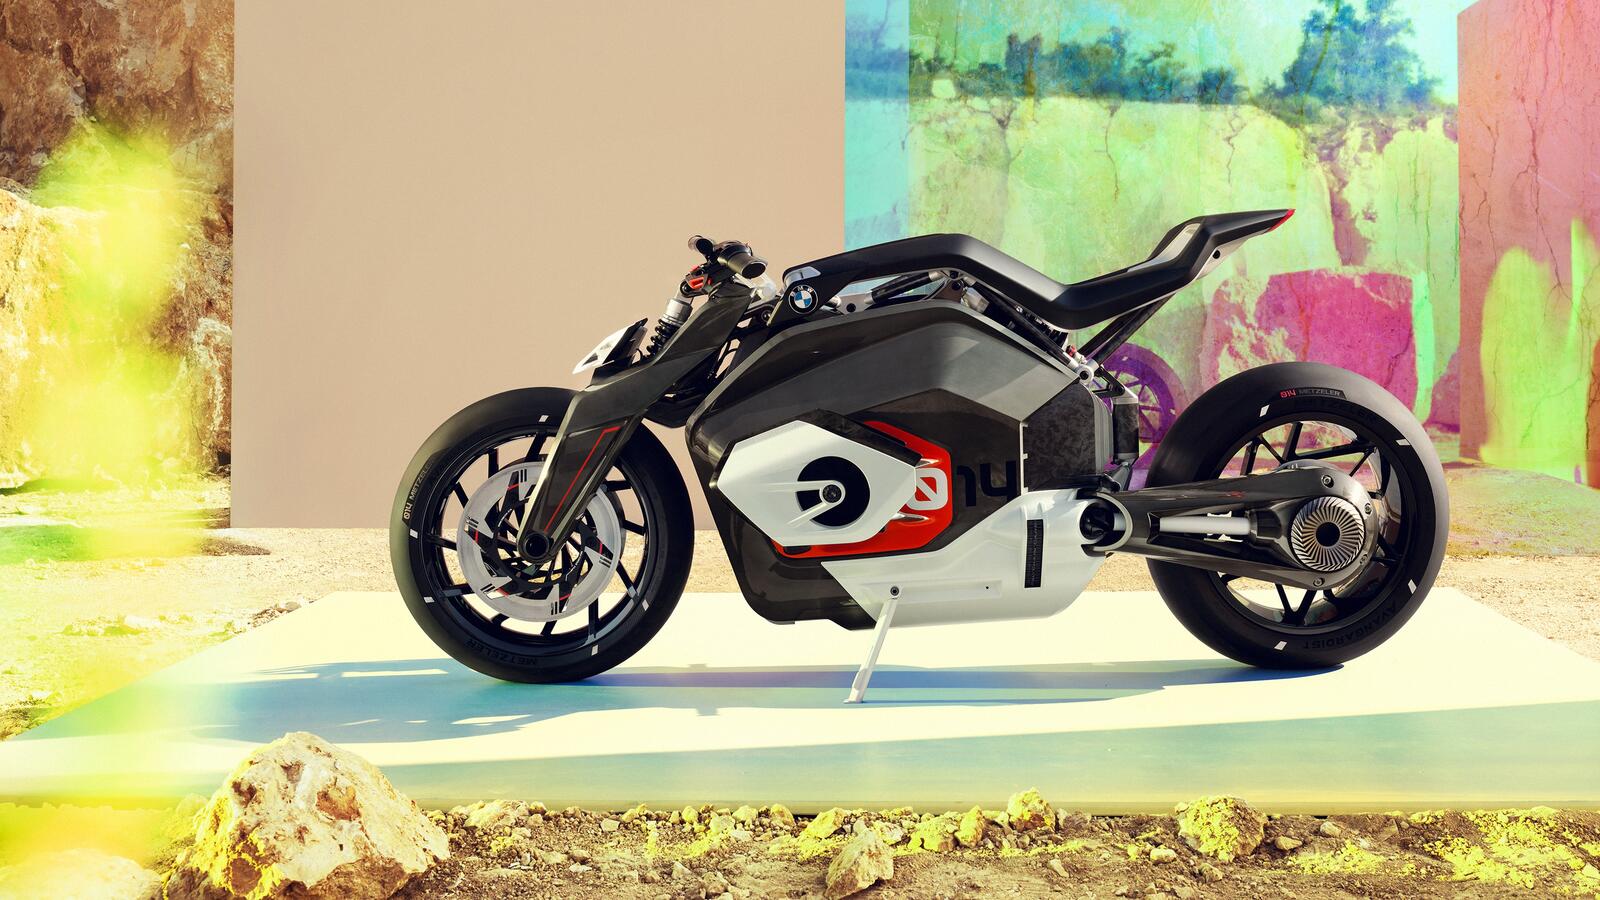 Wallpapers wallpaper bmw motorrad vision dc roadster futuristic motorbike side view on the desktop